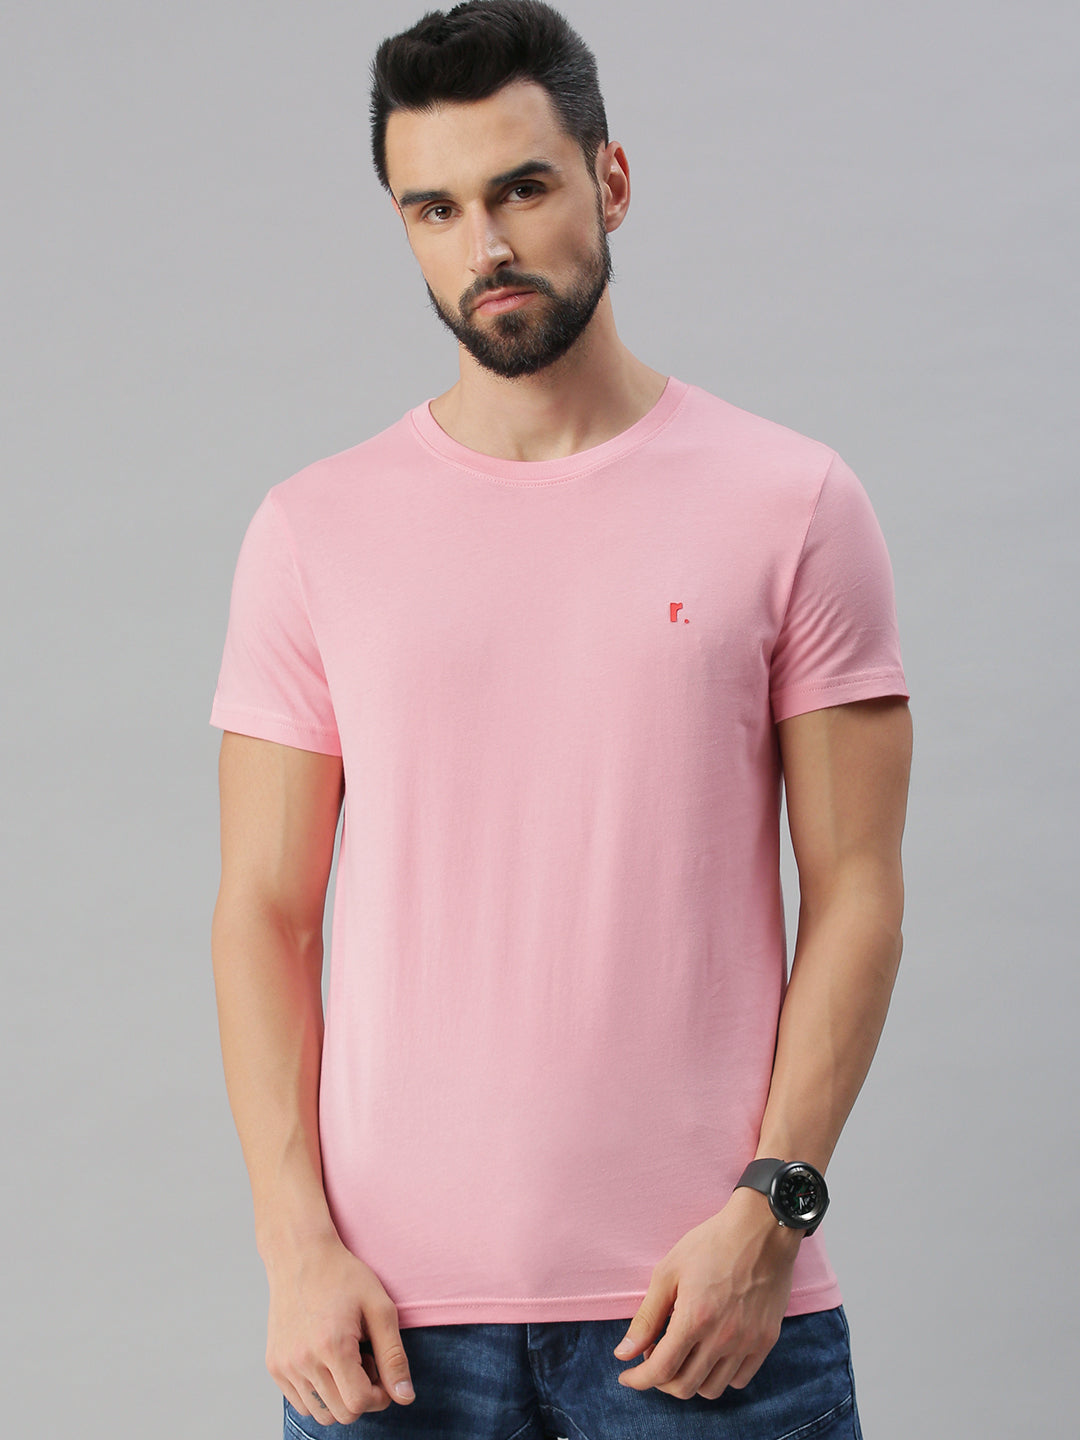 Solid pink round neck t-shirt